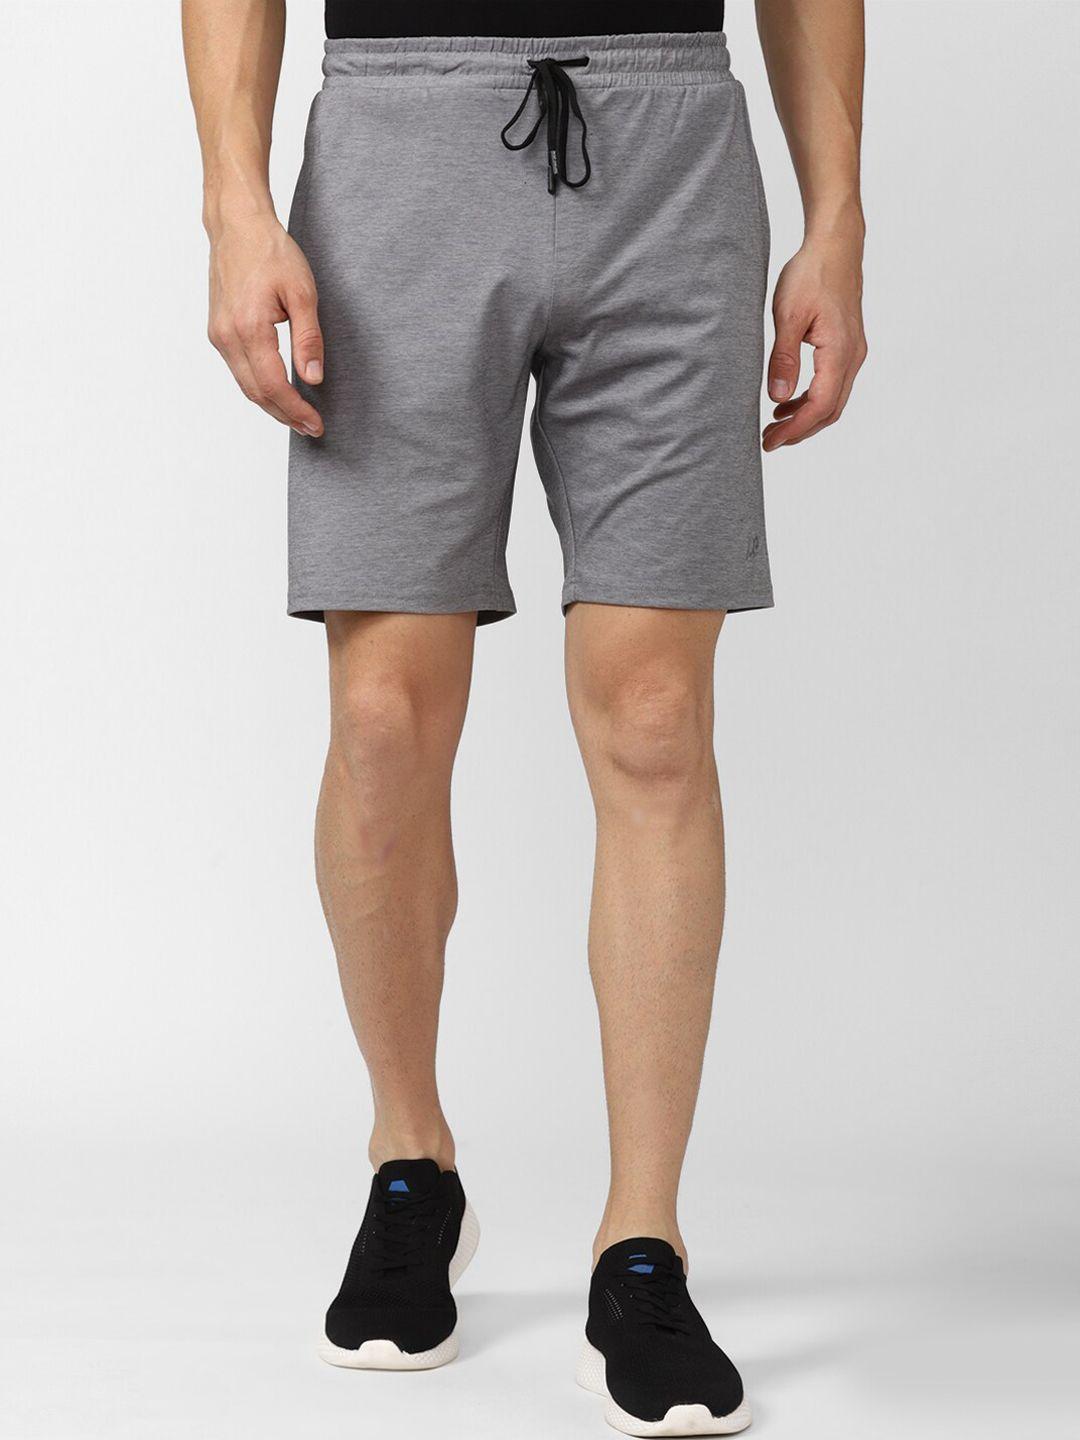 peter england casuals men grey sports shorts